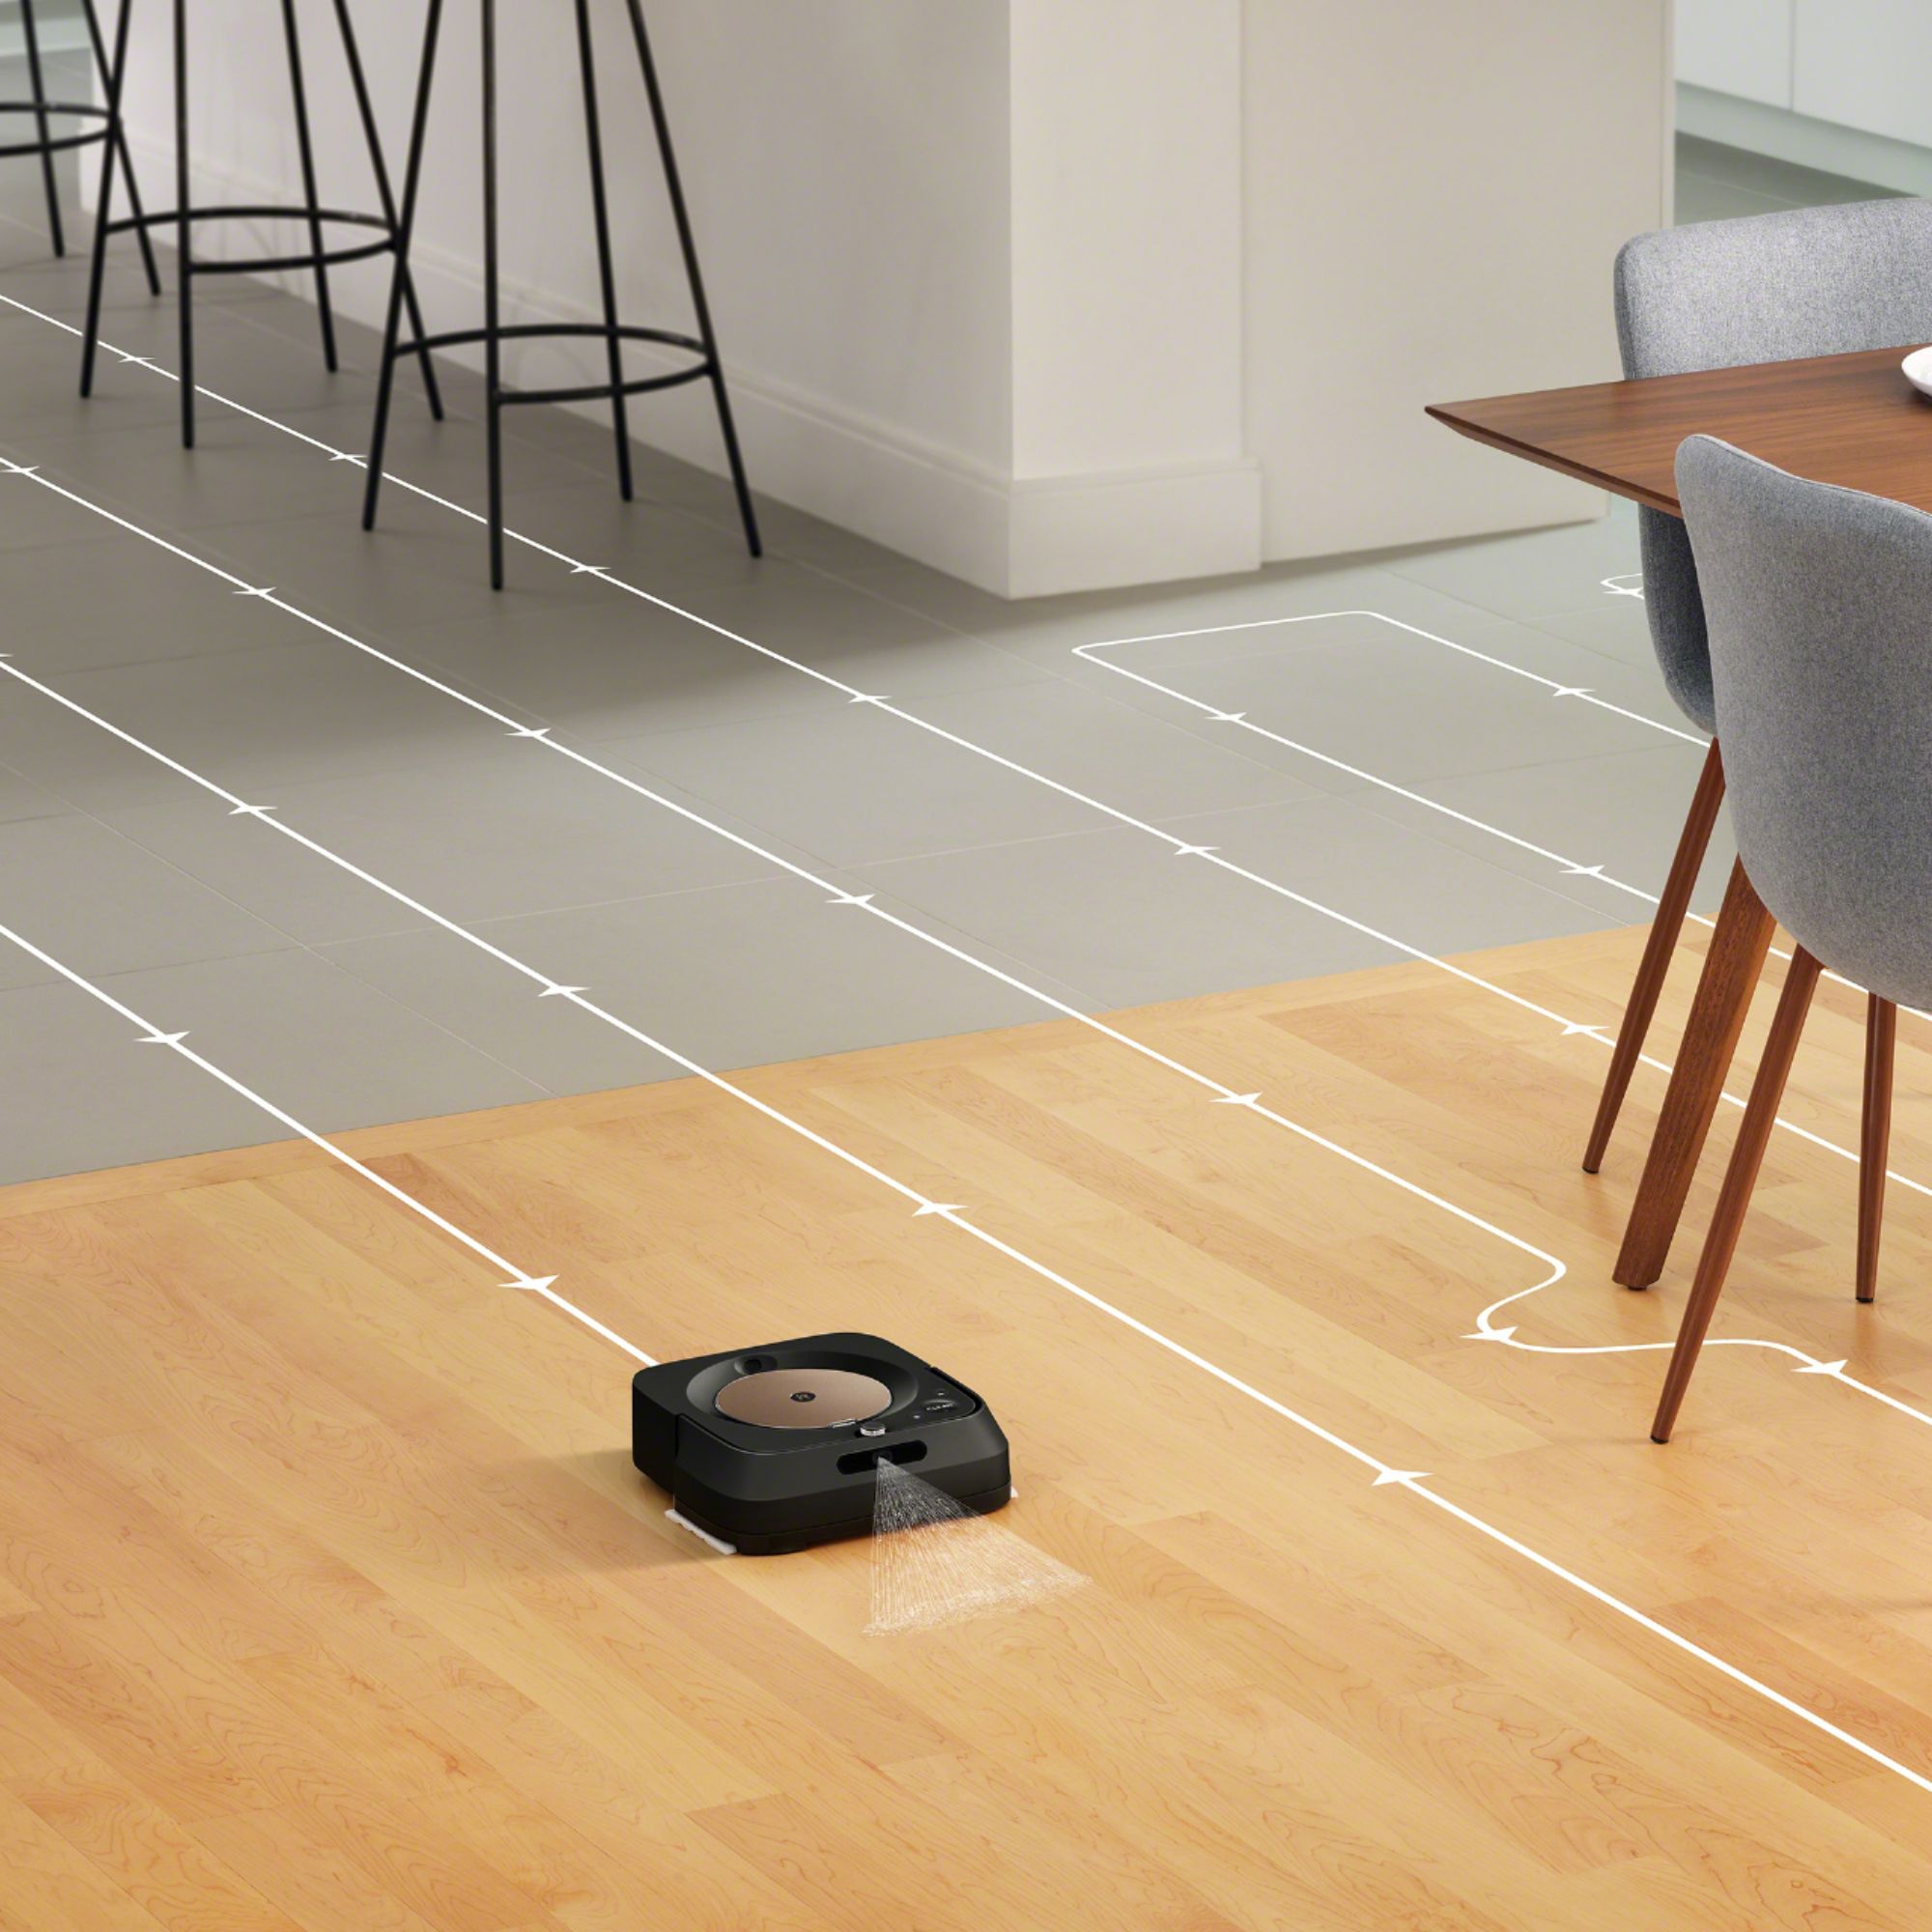 Irobot Roomba S9 9550 Robot Vacuum, Is Roomba Safe For Laminate Floors